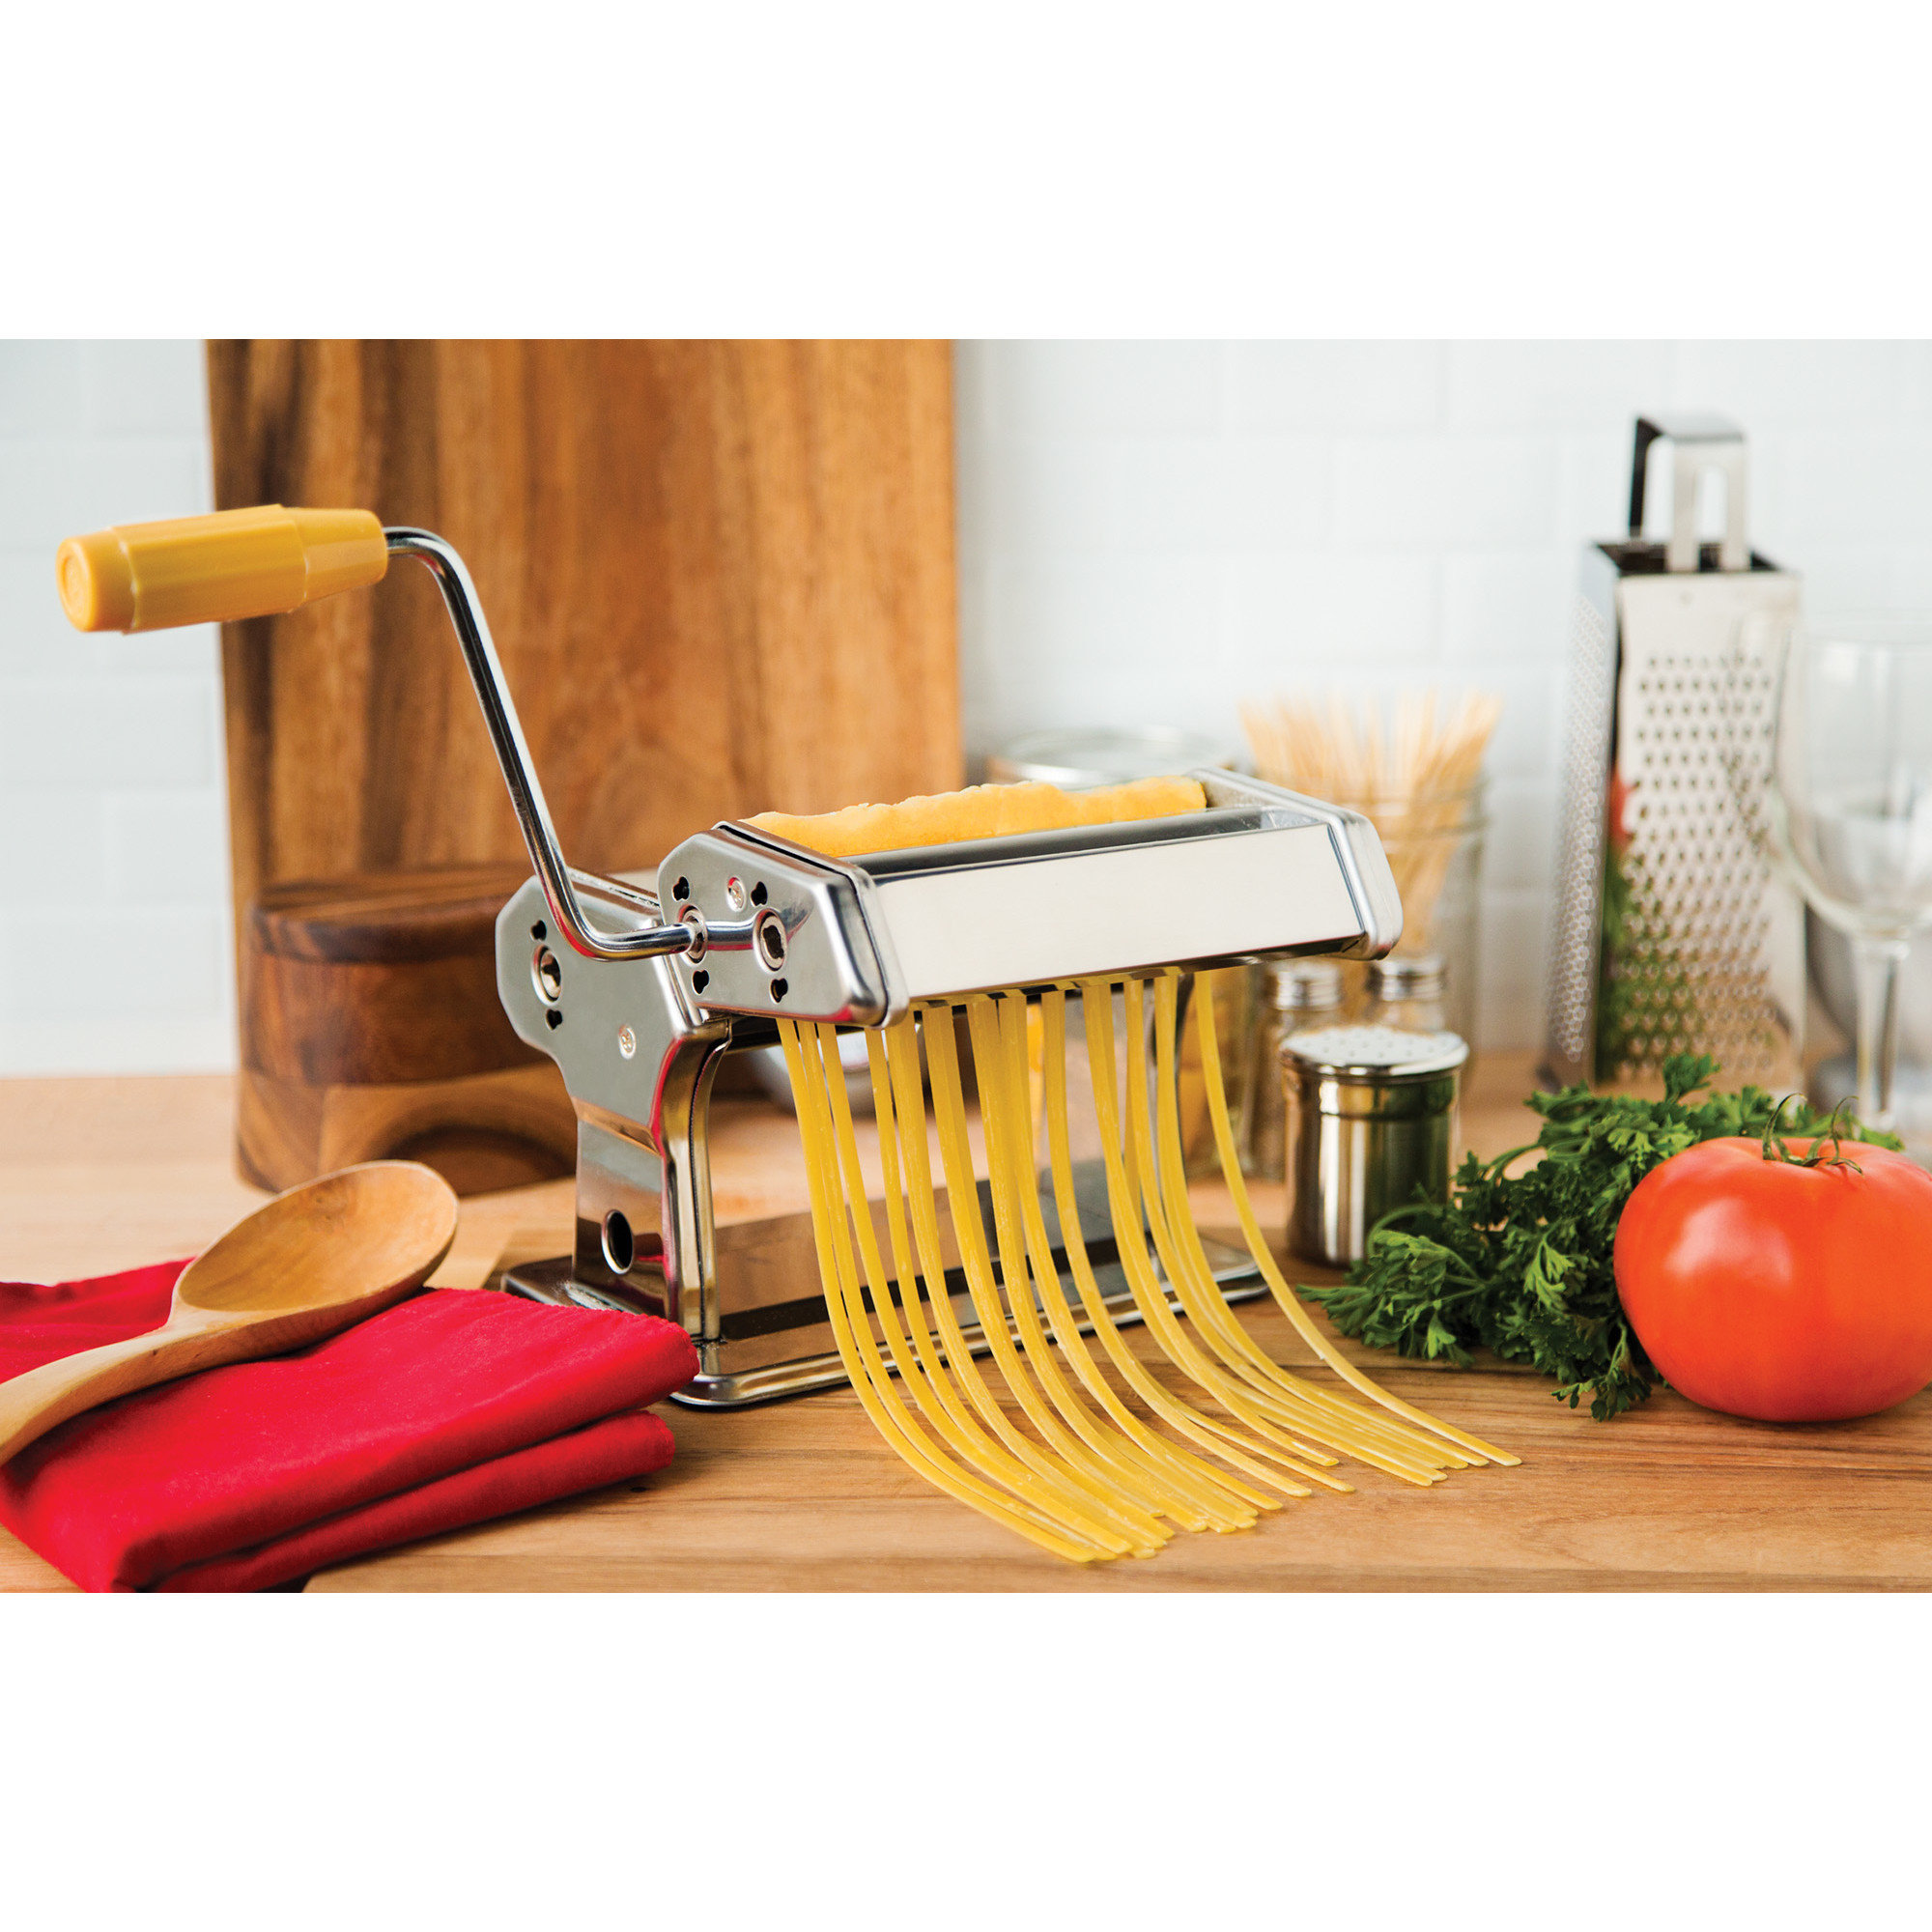 Hamilton Beach White Electric Pasta Maker 86650 - The Home Depot